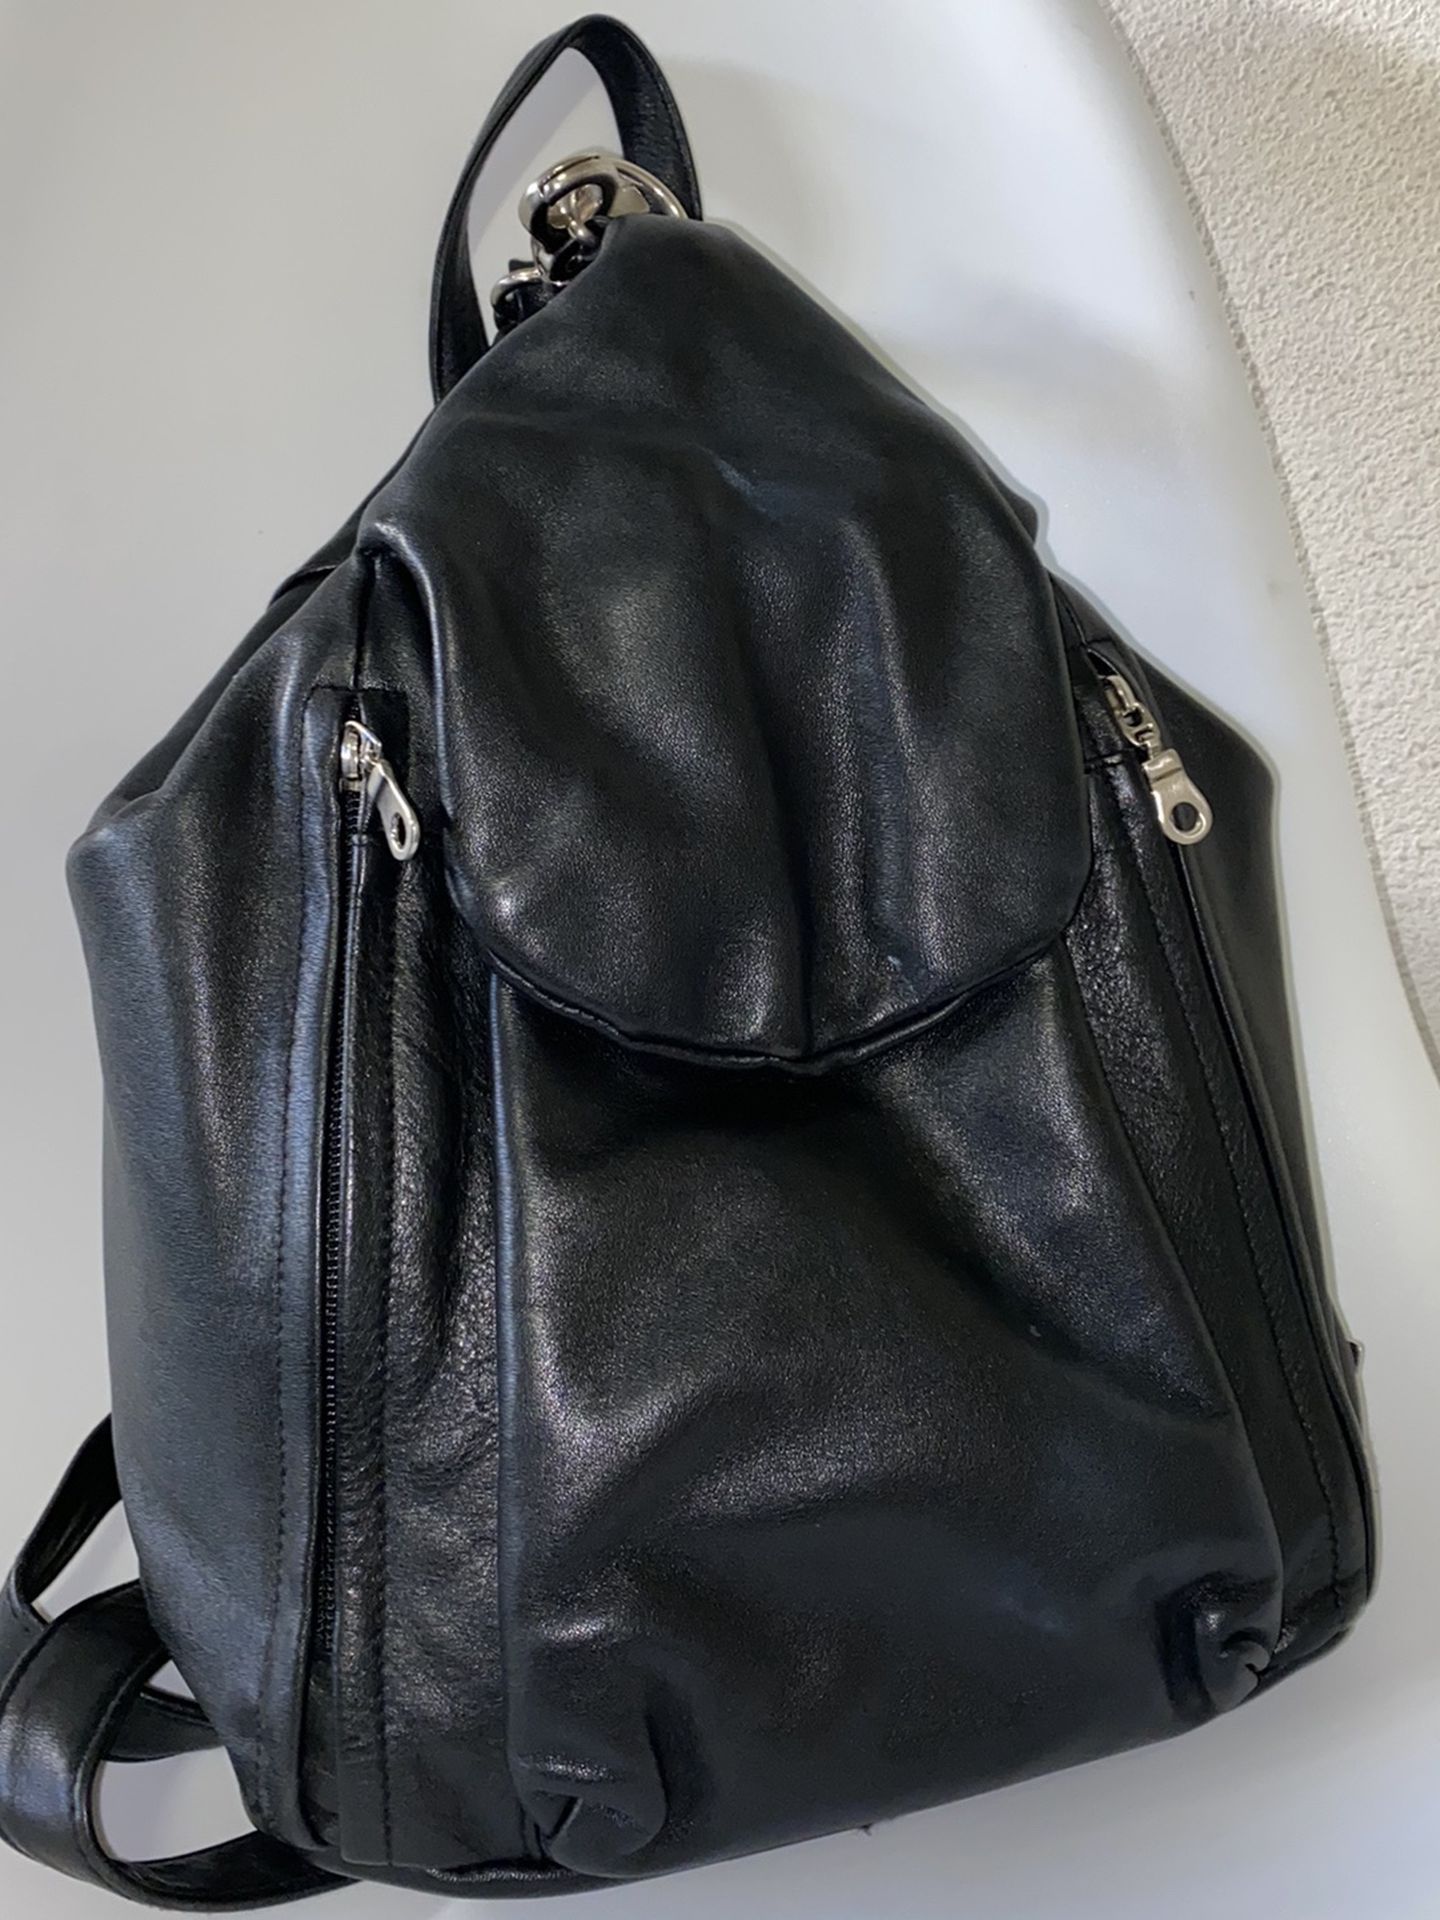 Black Purse/backpack